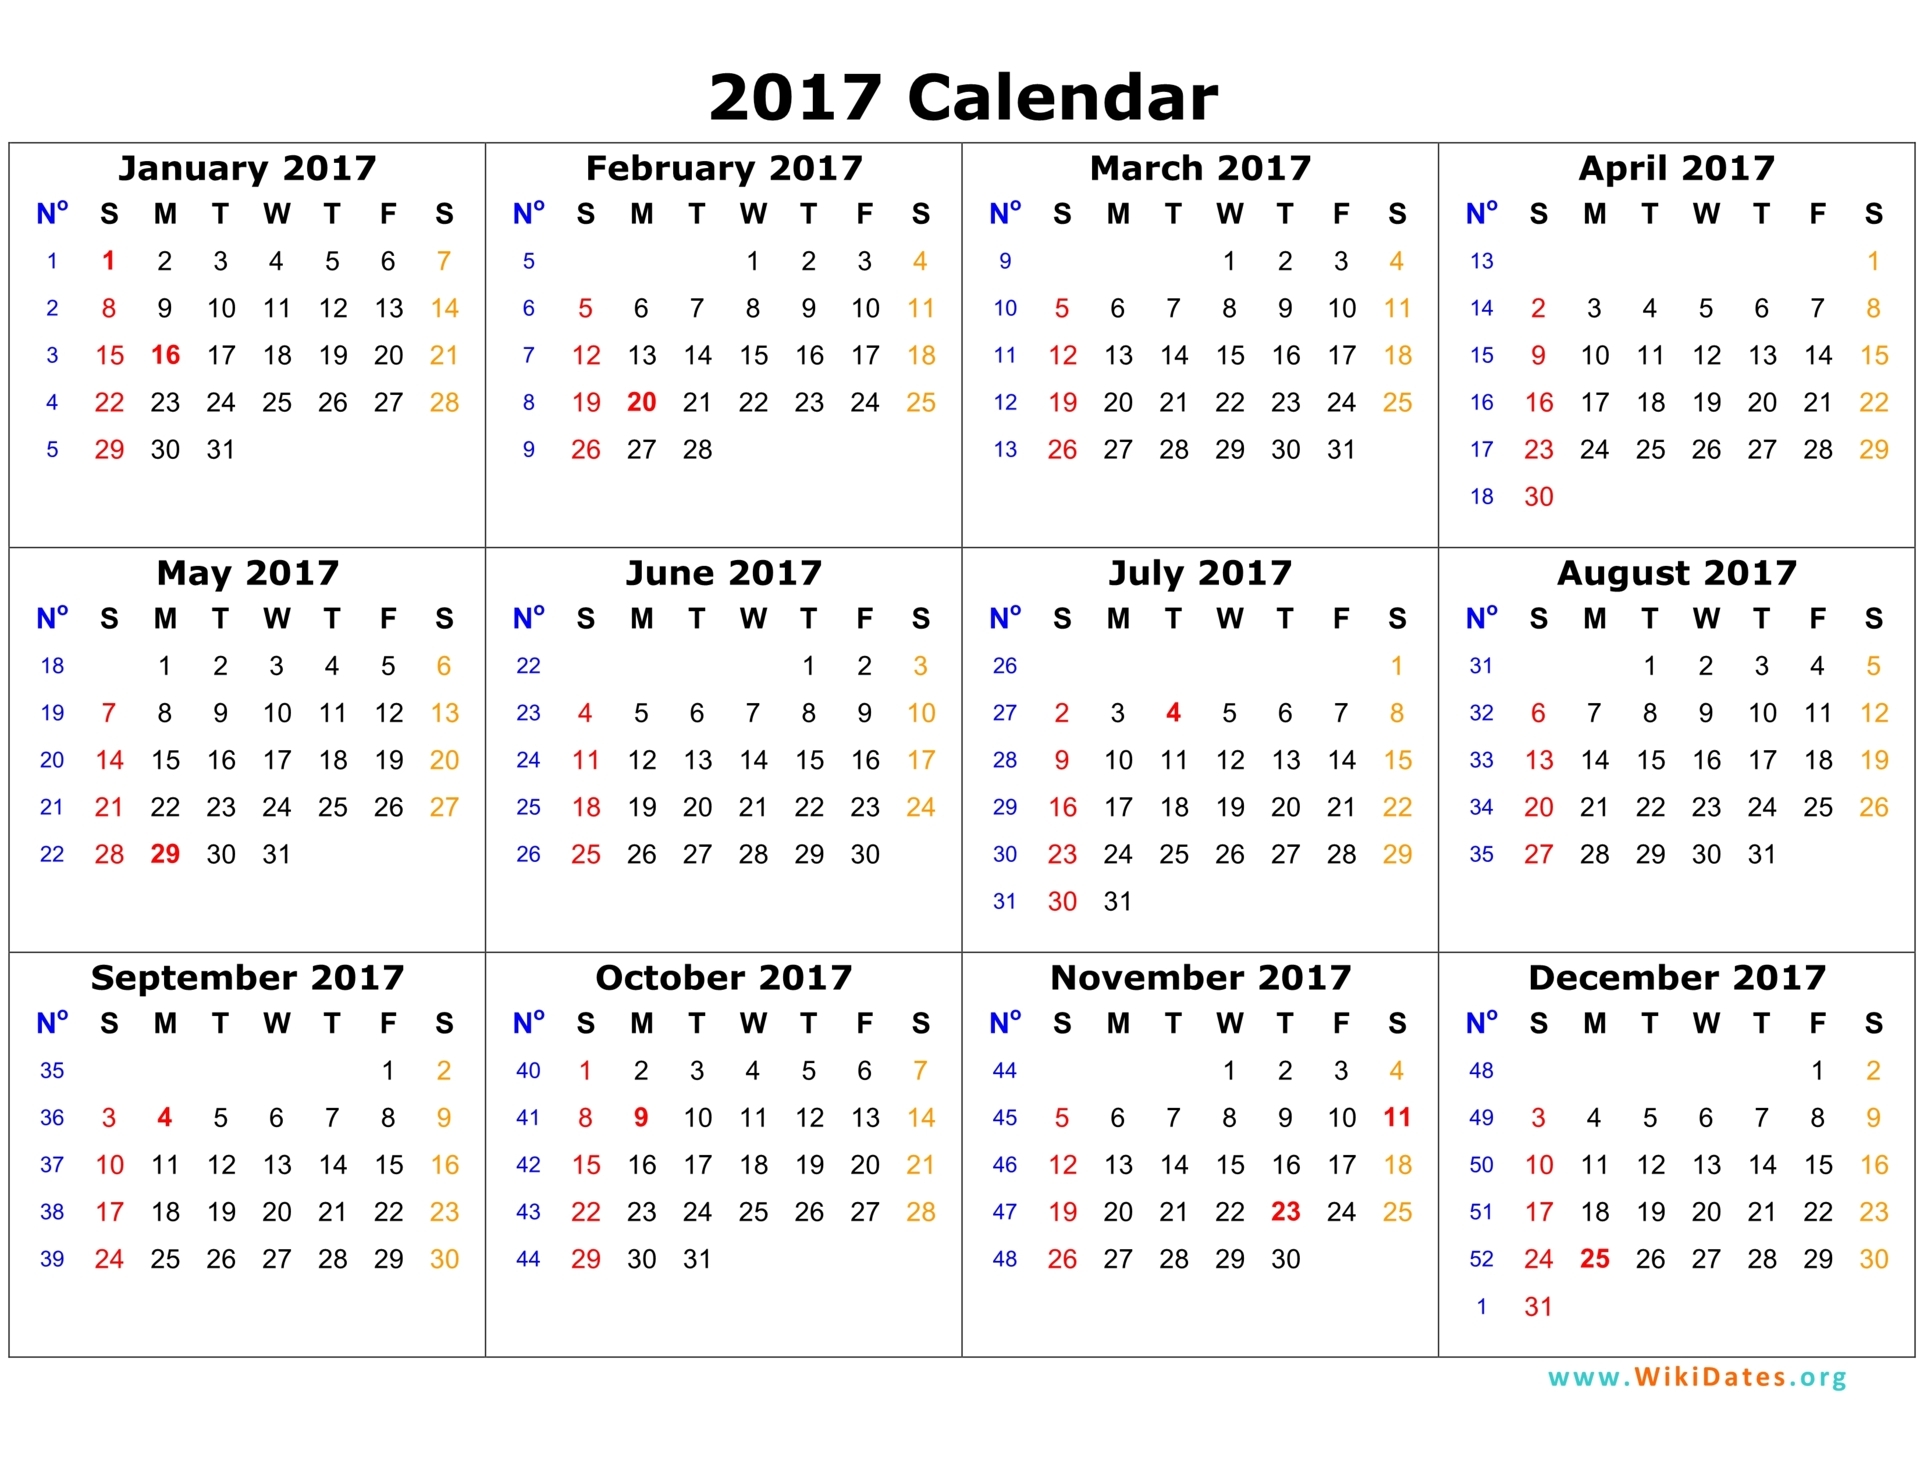 2017 Calendar WikiDates org